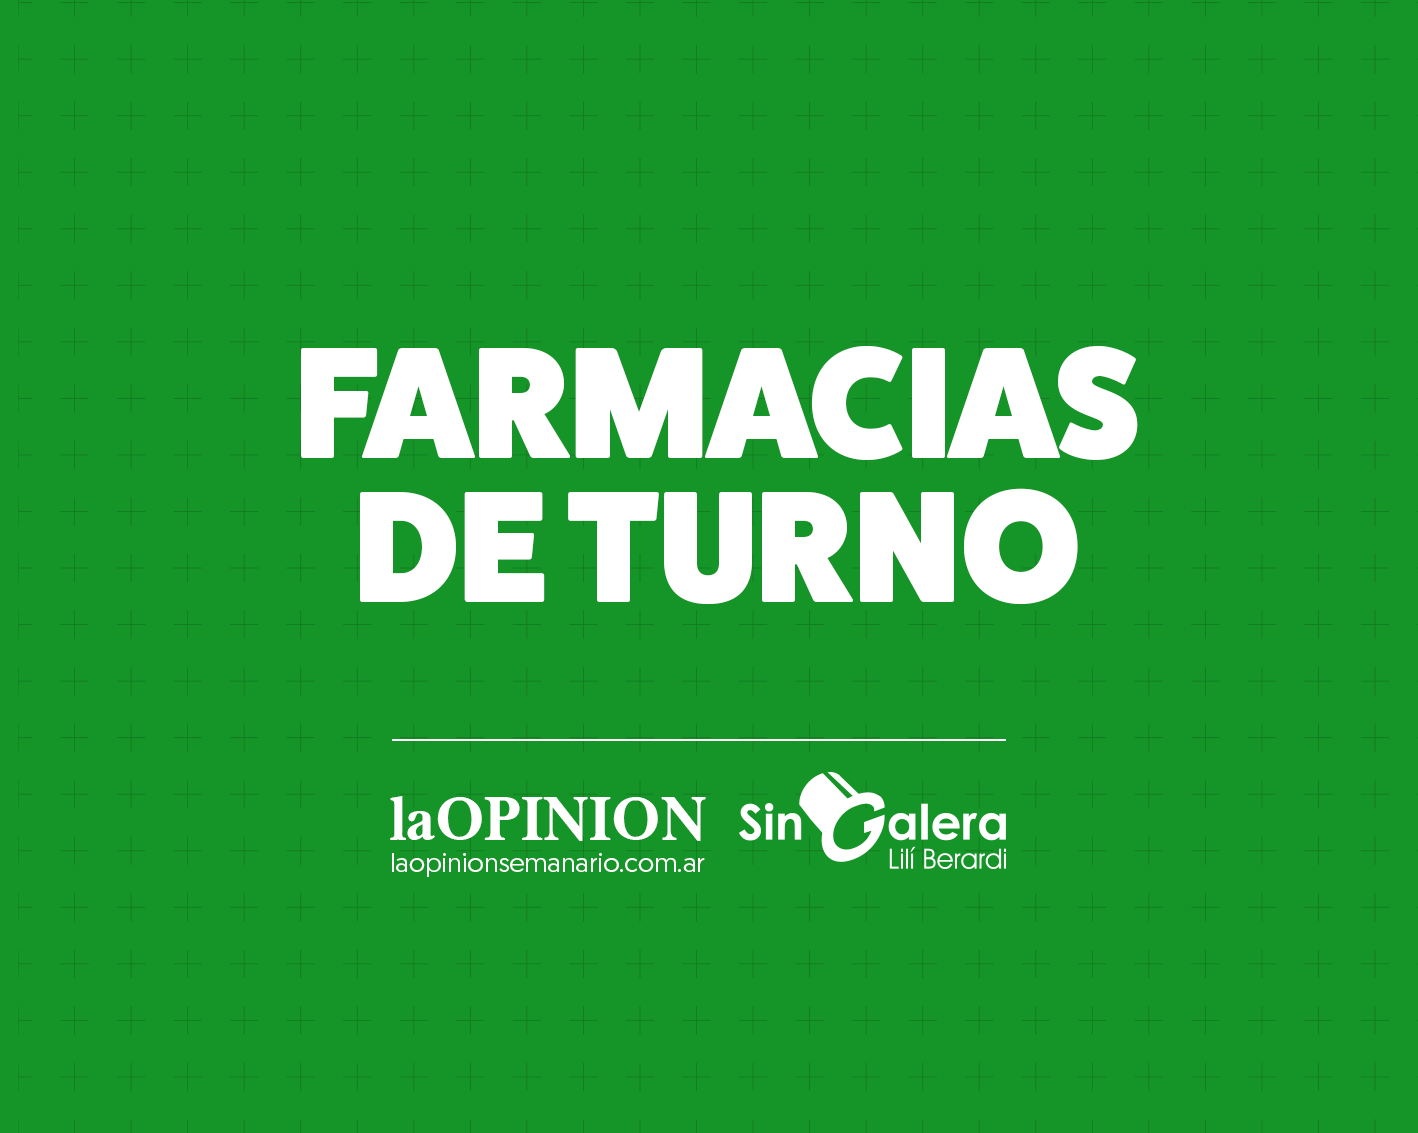 Farmacias de turno 18/04: Traverso, Mauro Coliva y Molina